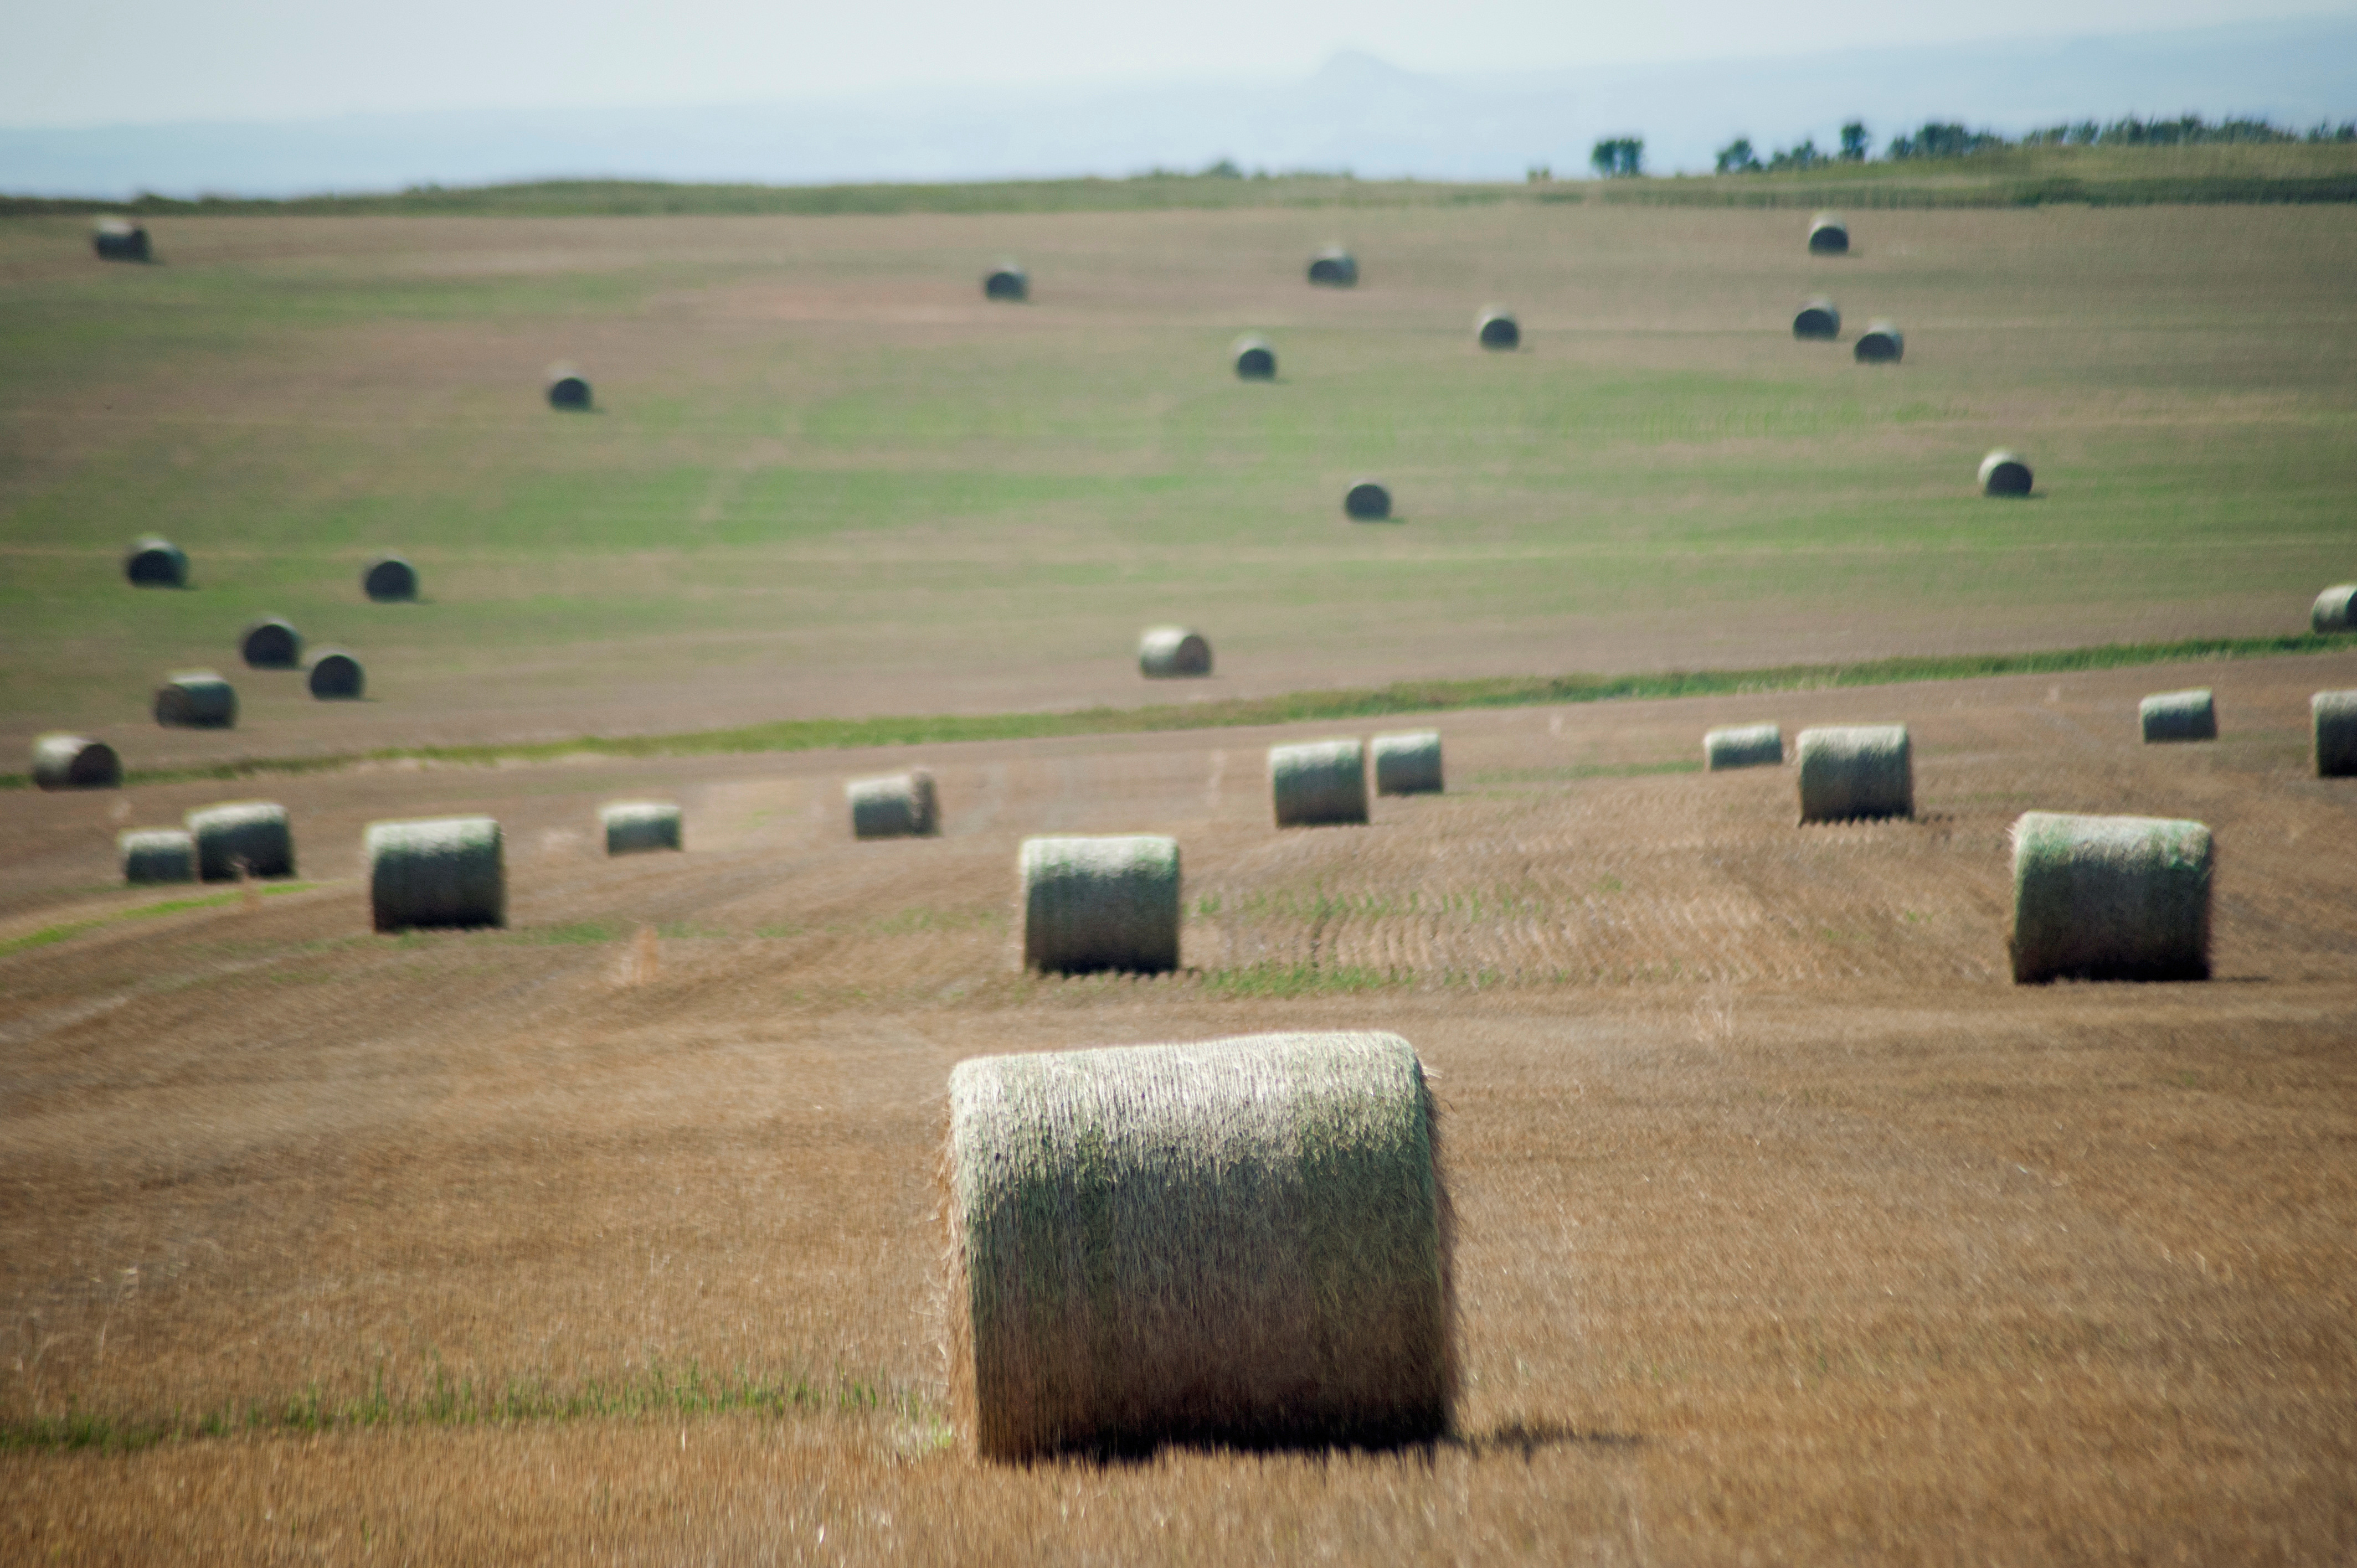 Hay bales rest in a field in Killdeer, North Dakota